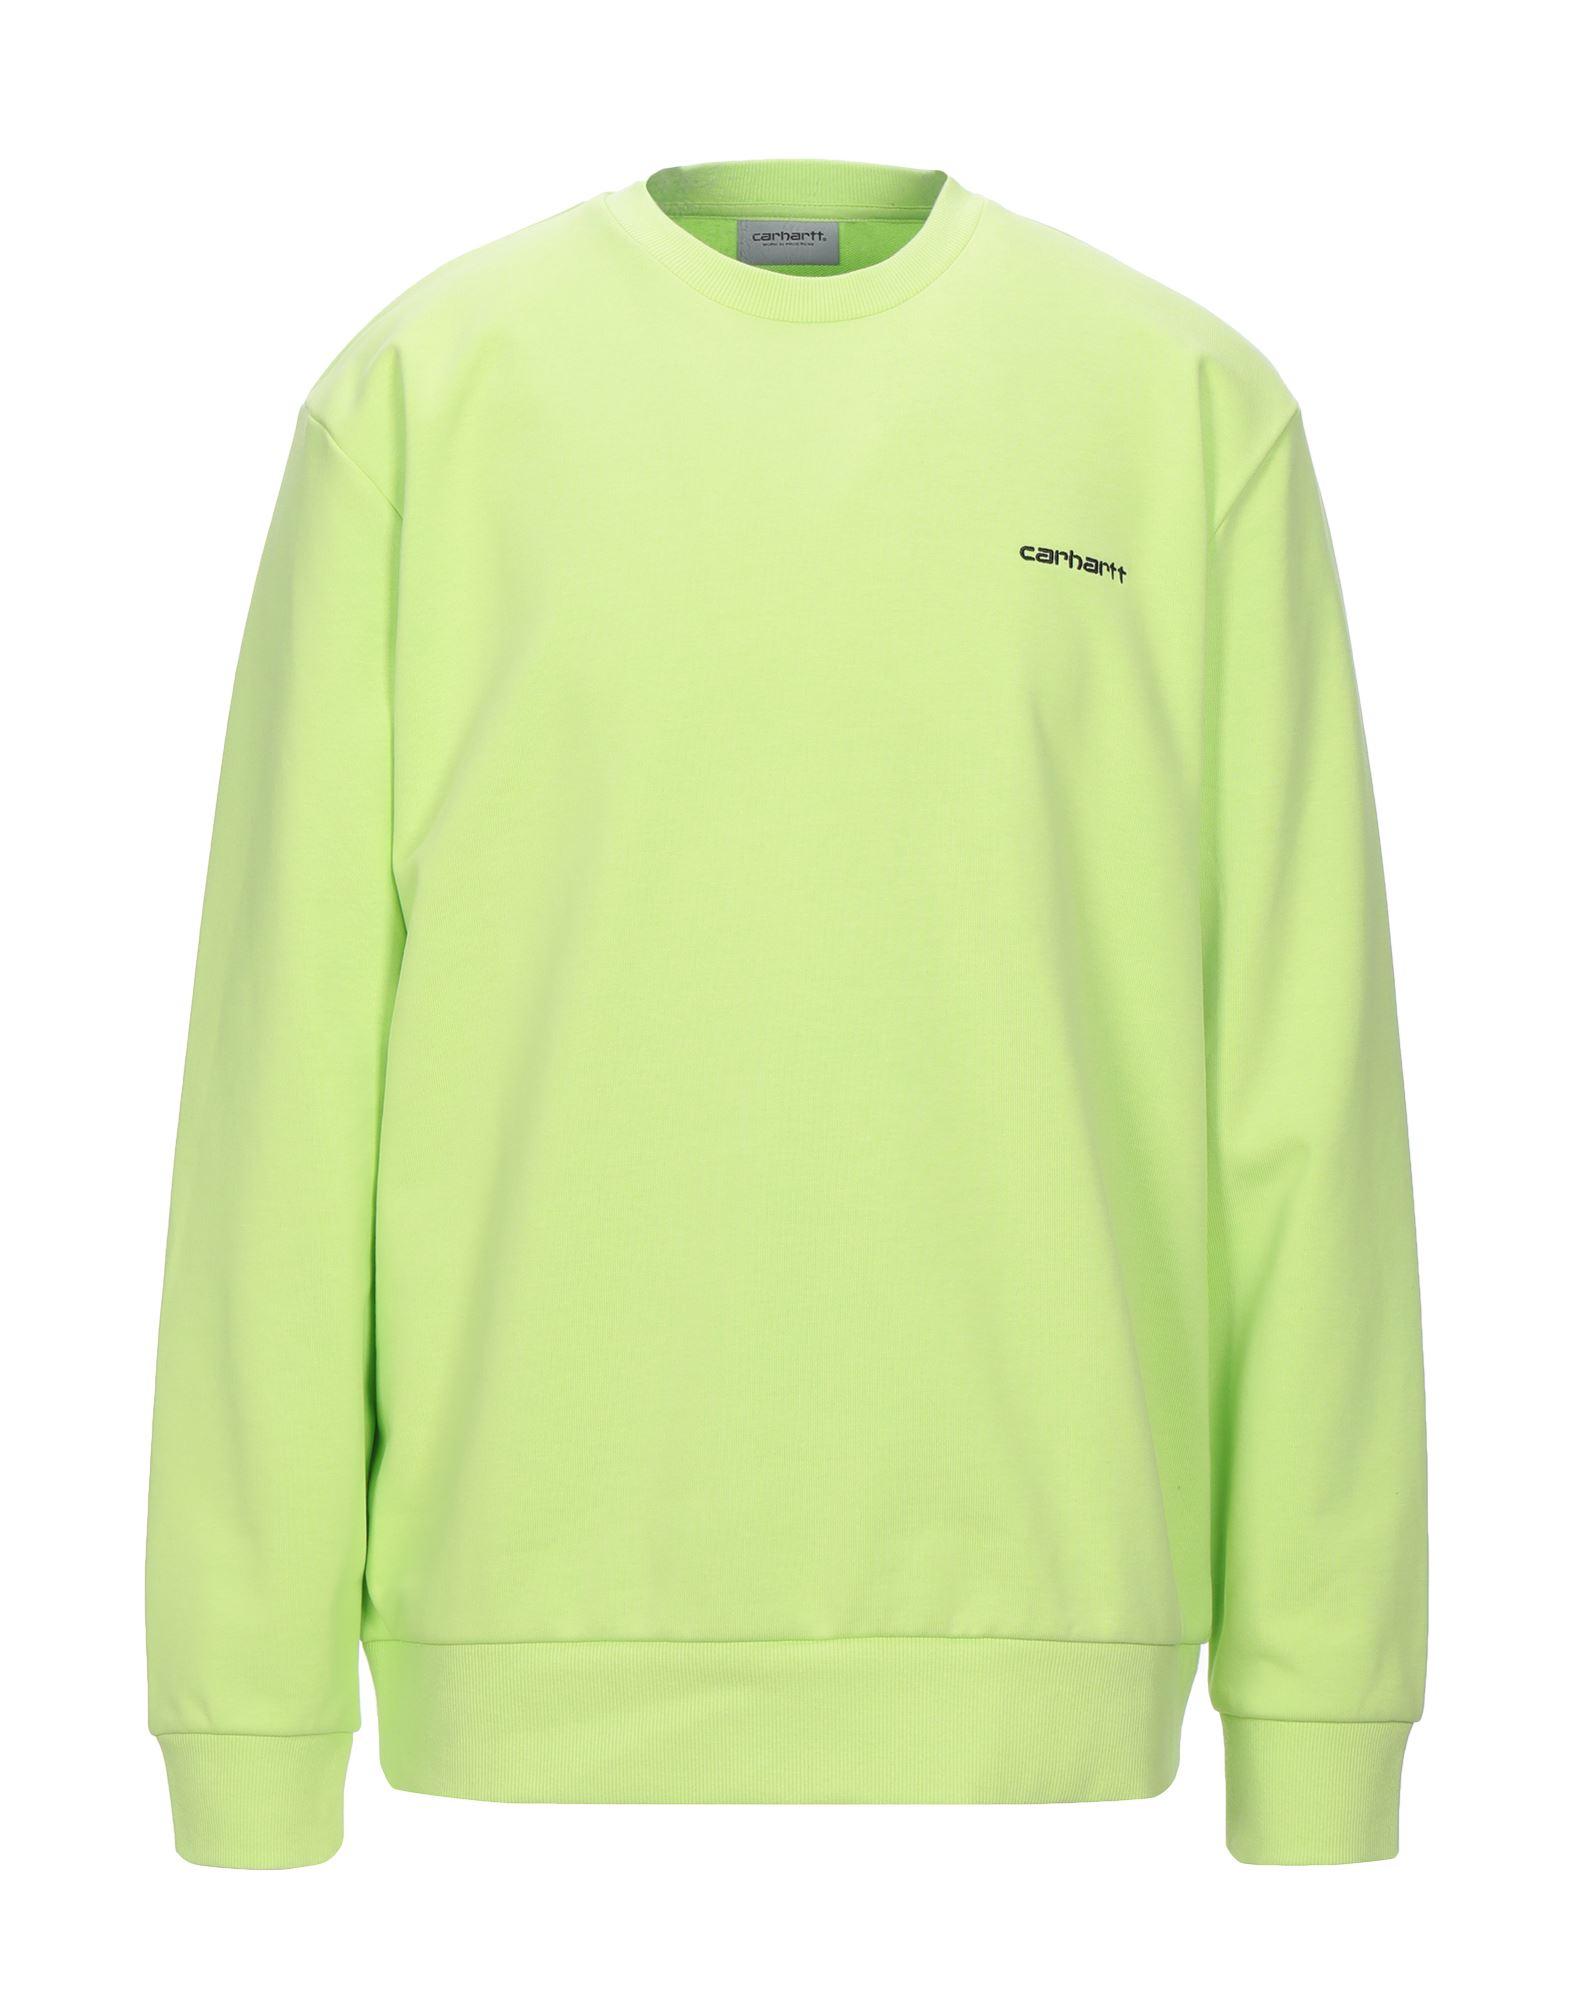 Carhartt Fleece Sweatshirt in Light Green (Green) for Men - Lyst